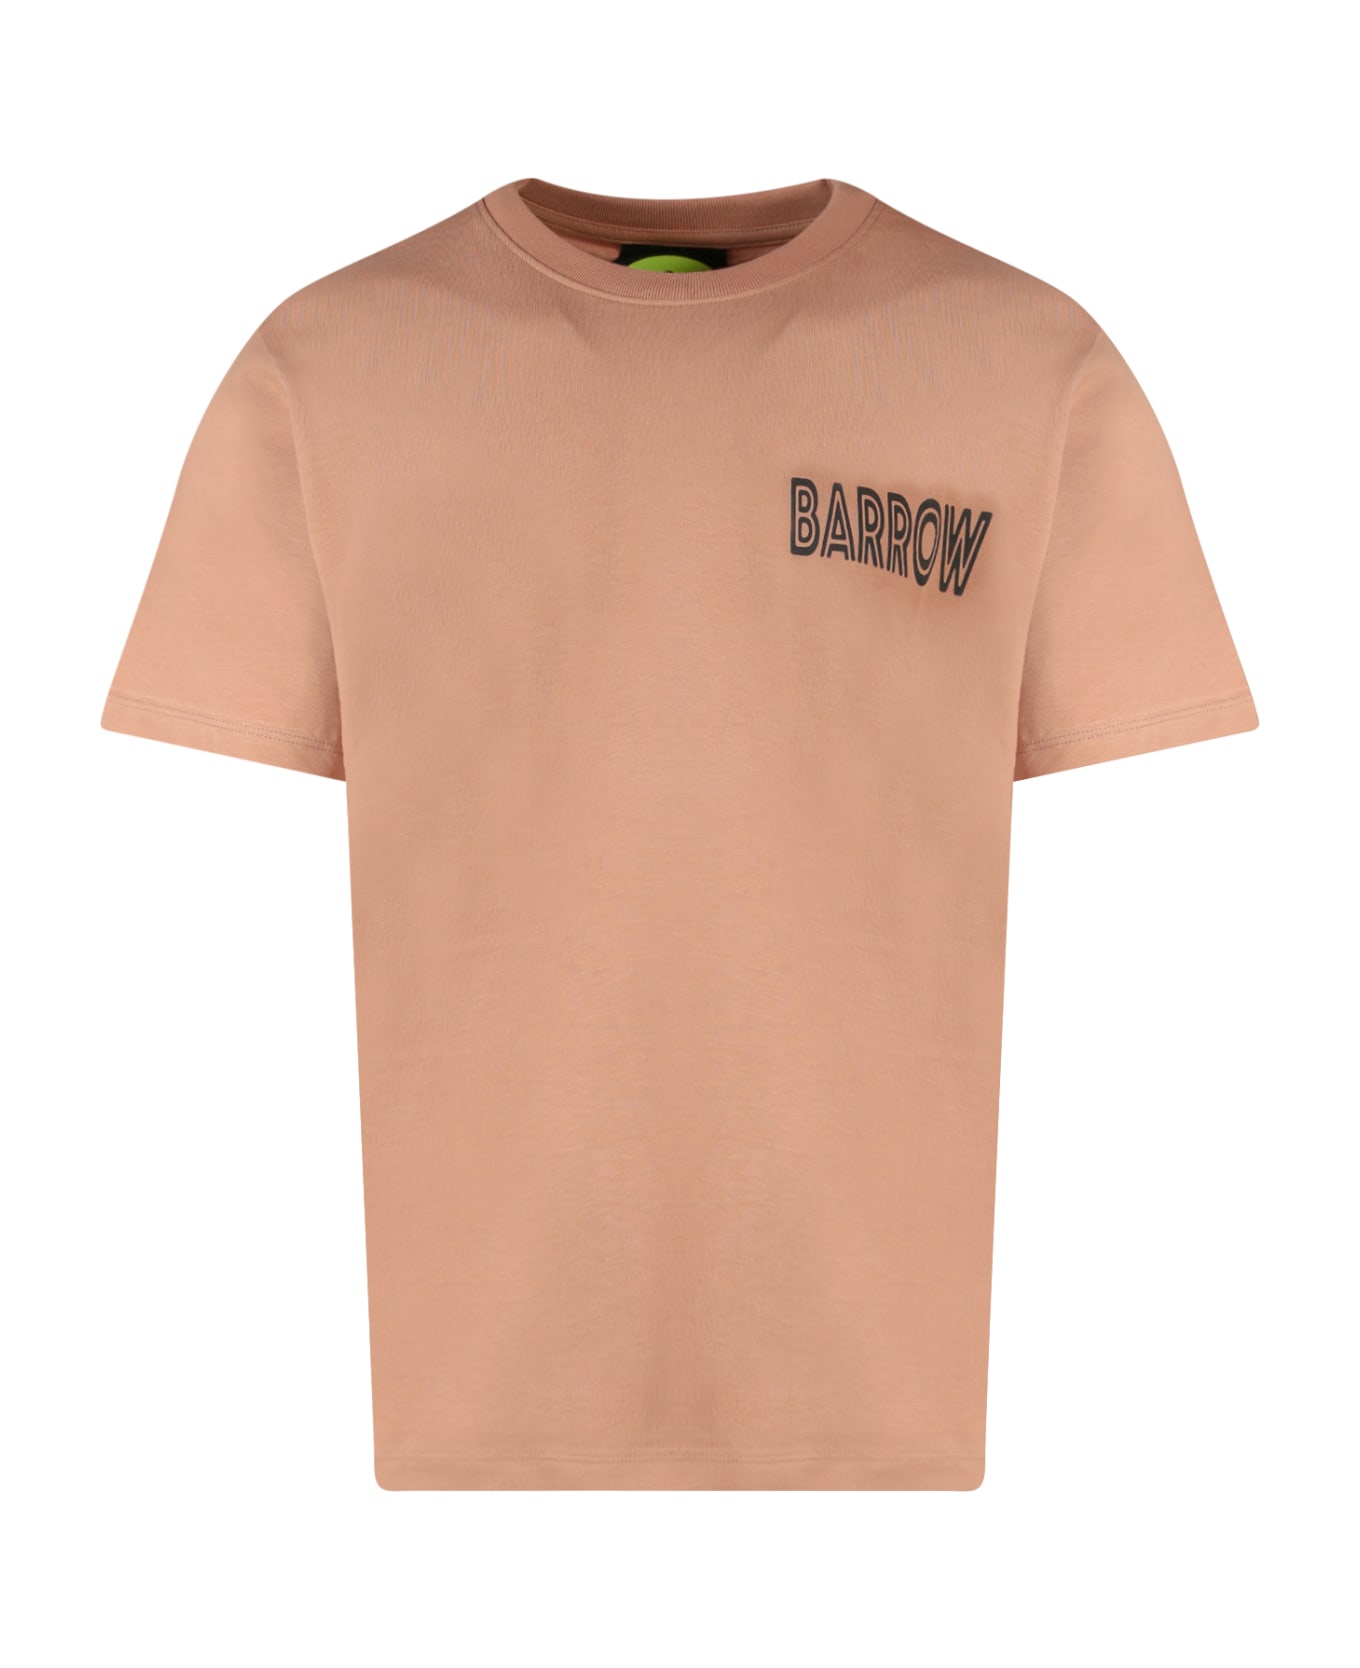 Barrow T-shirt - Burnt Sand シャツ